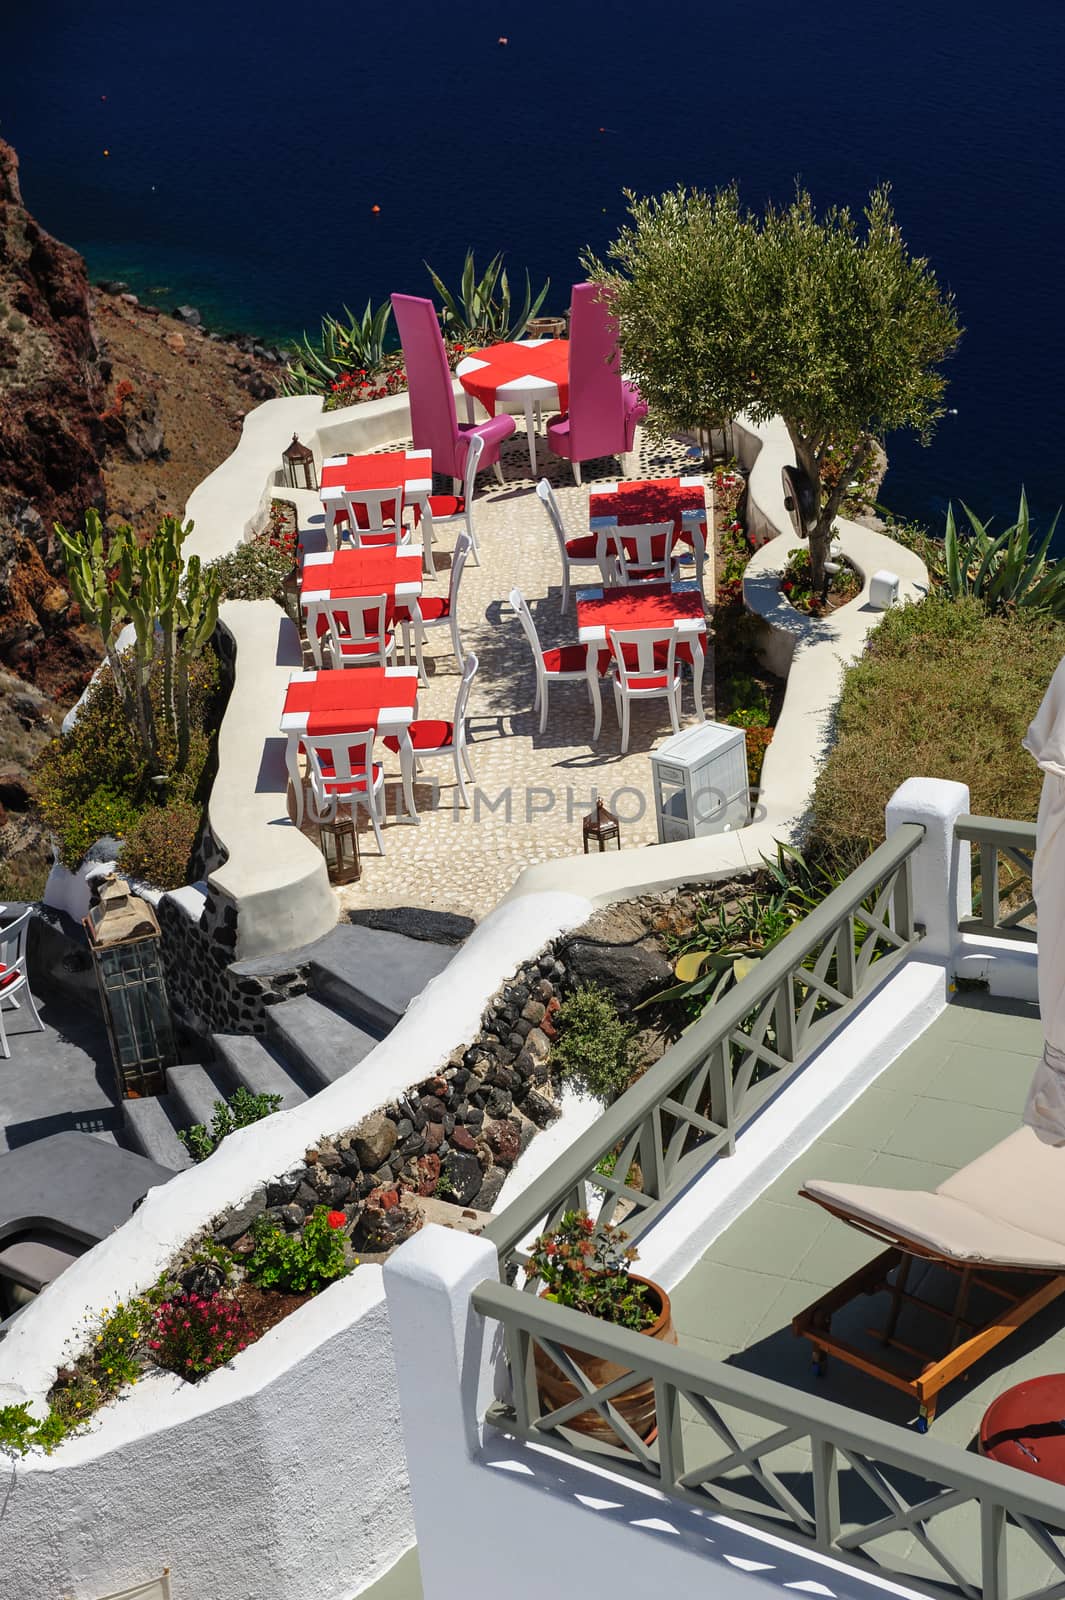 Luxury outdoor sea view cafe of Oia, Santorini, Greece.